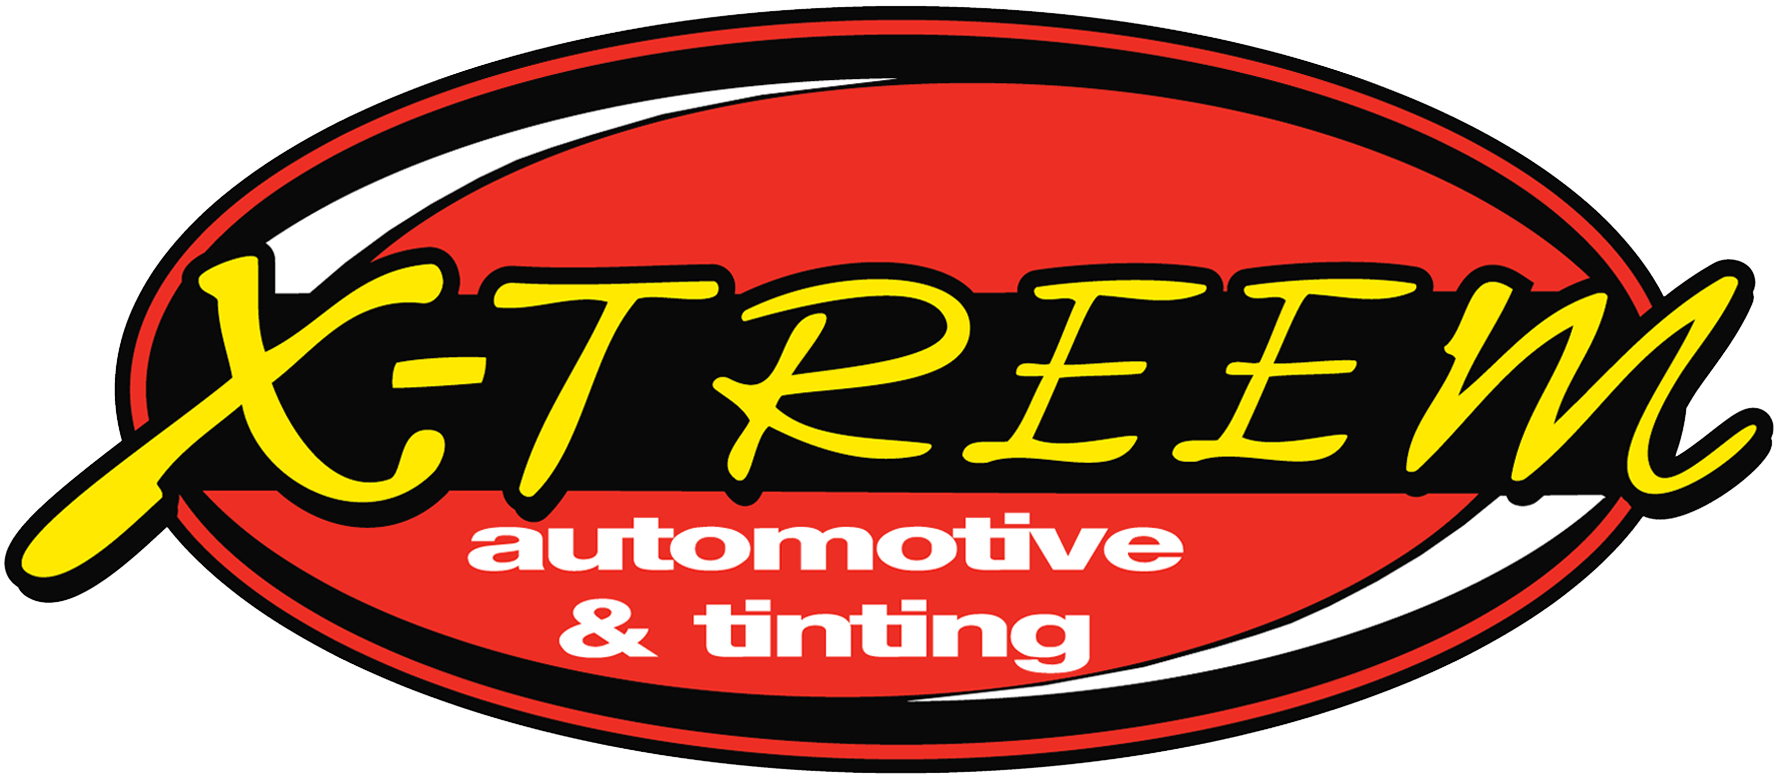 X-Treem Automotive & Tinting